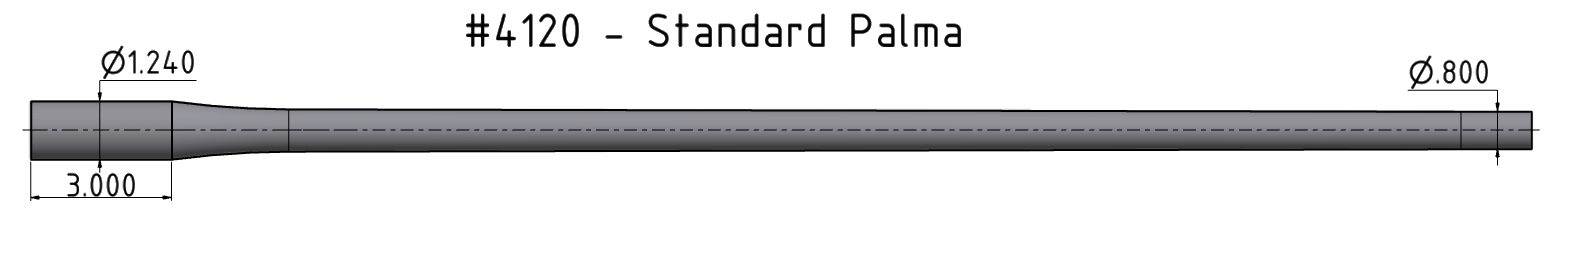 4120-Standard-Palma.png